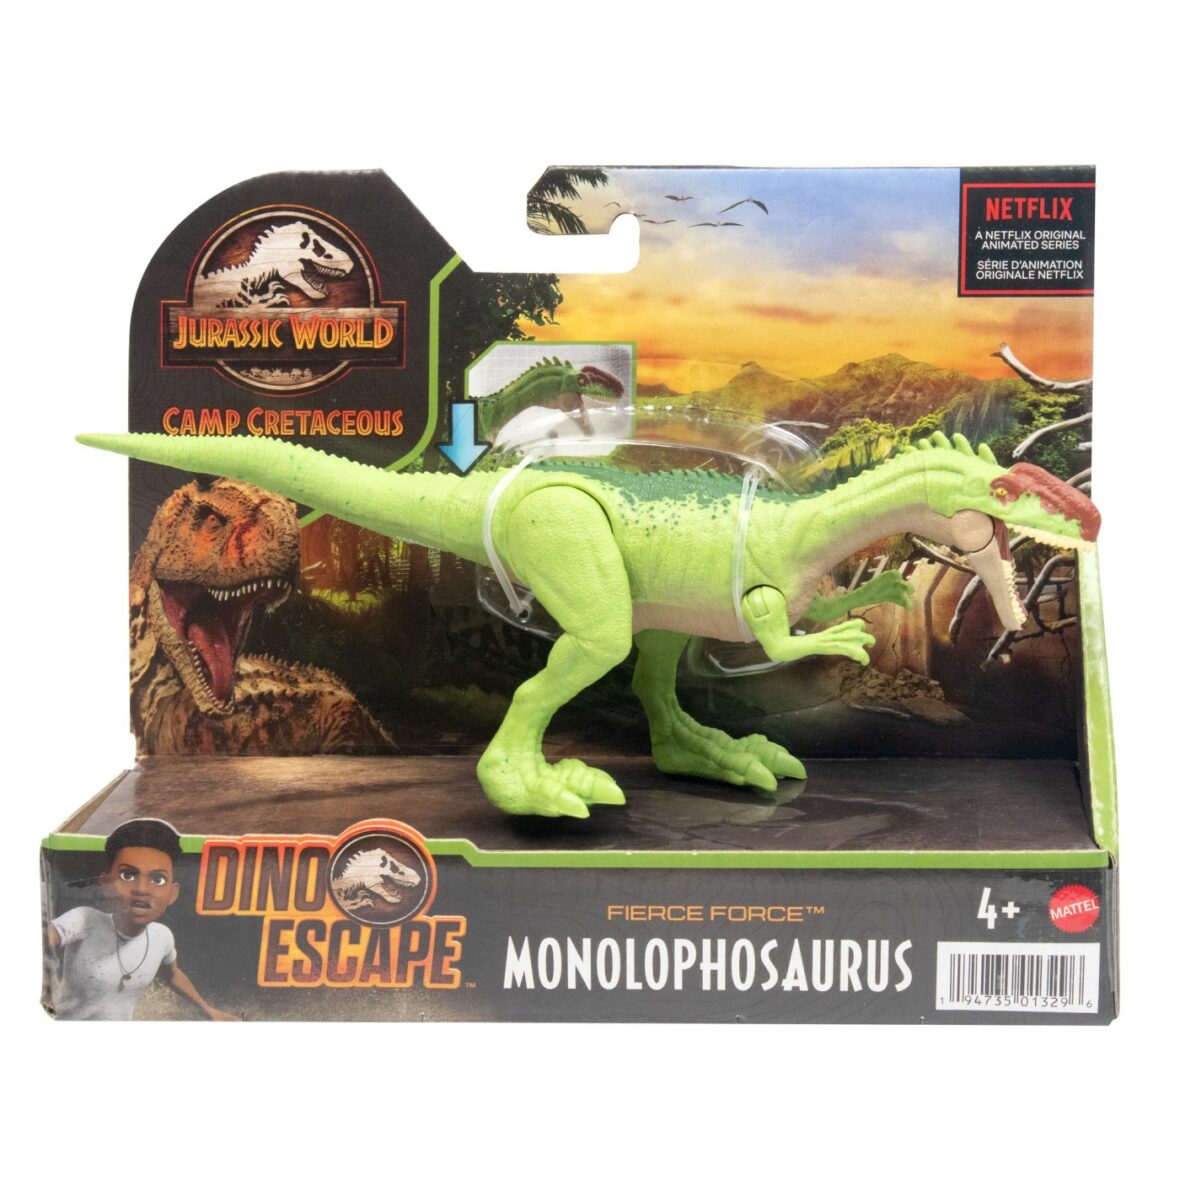 Jurassic World Dino Escape Fierce Force Dinozaur Monolophosaurus